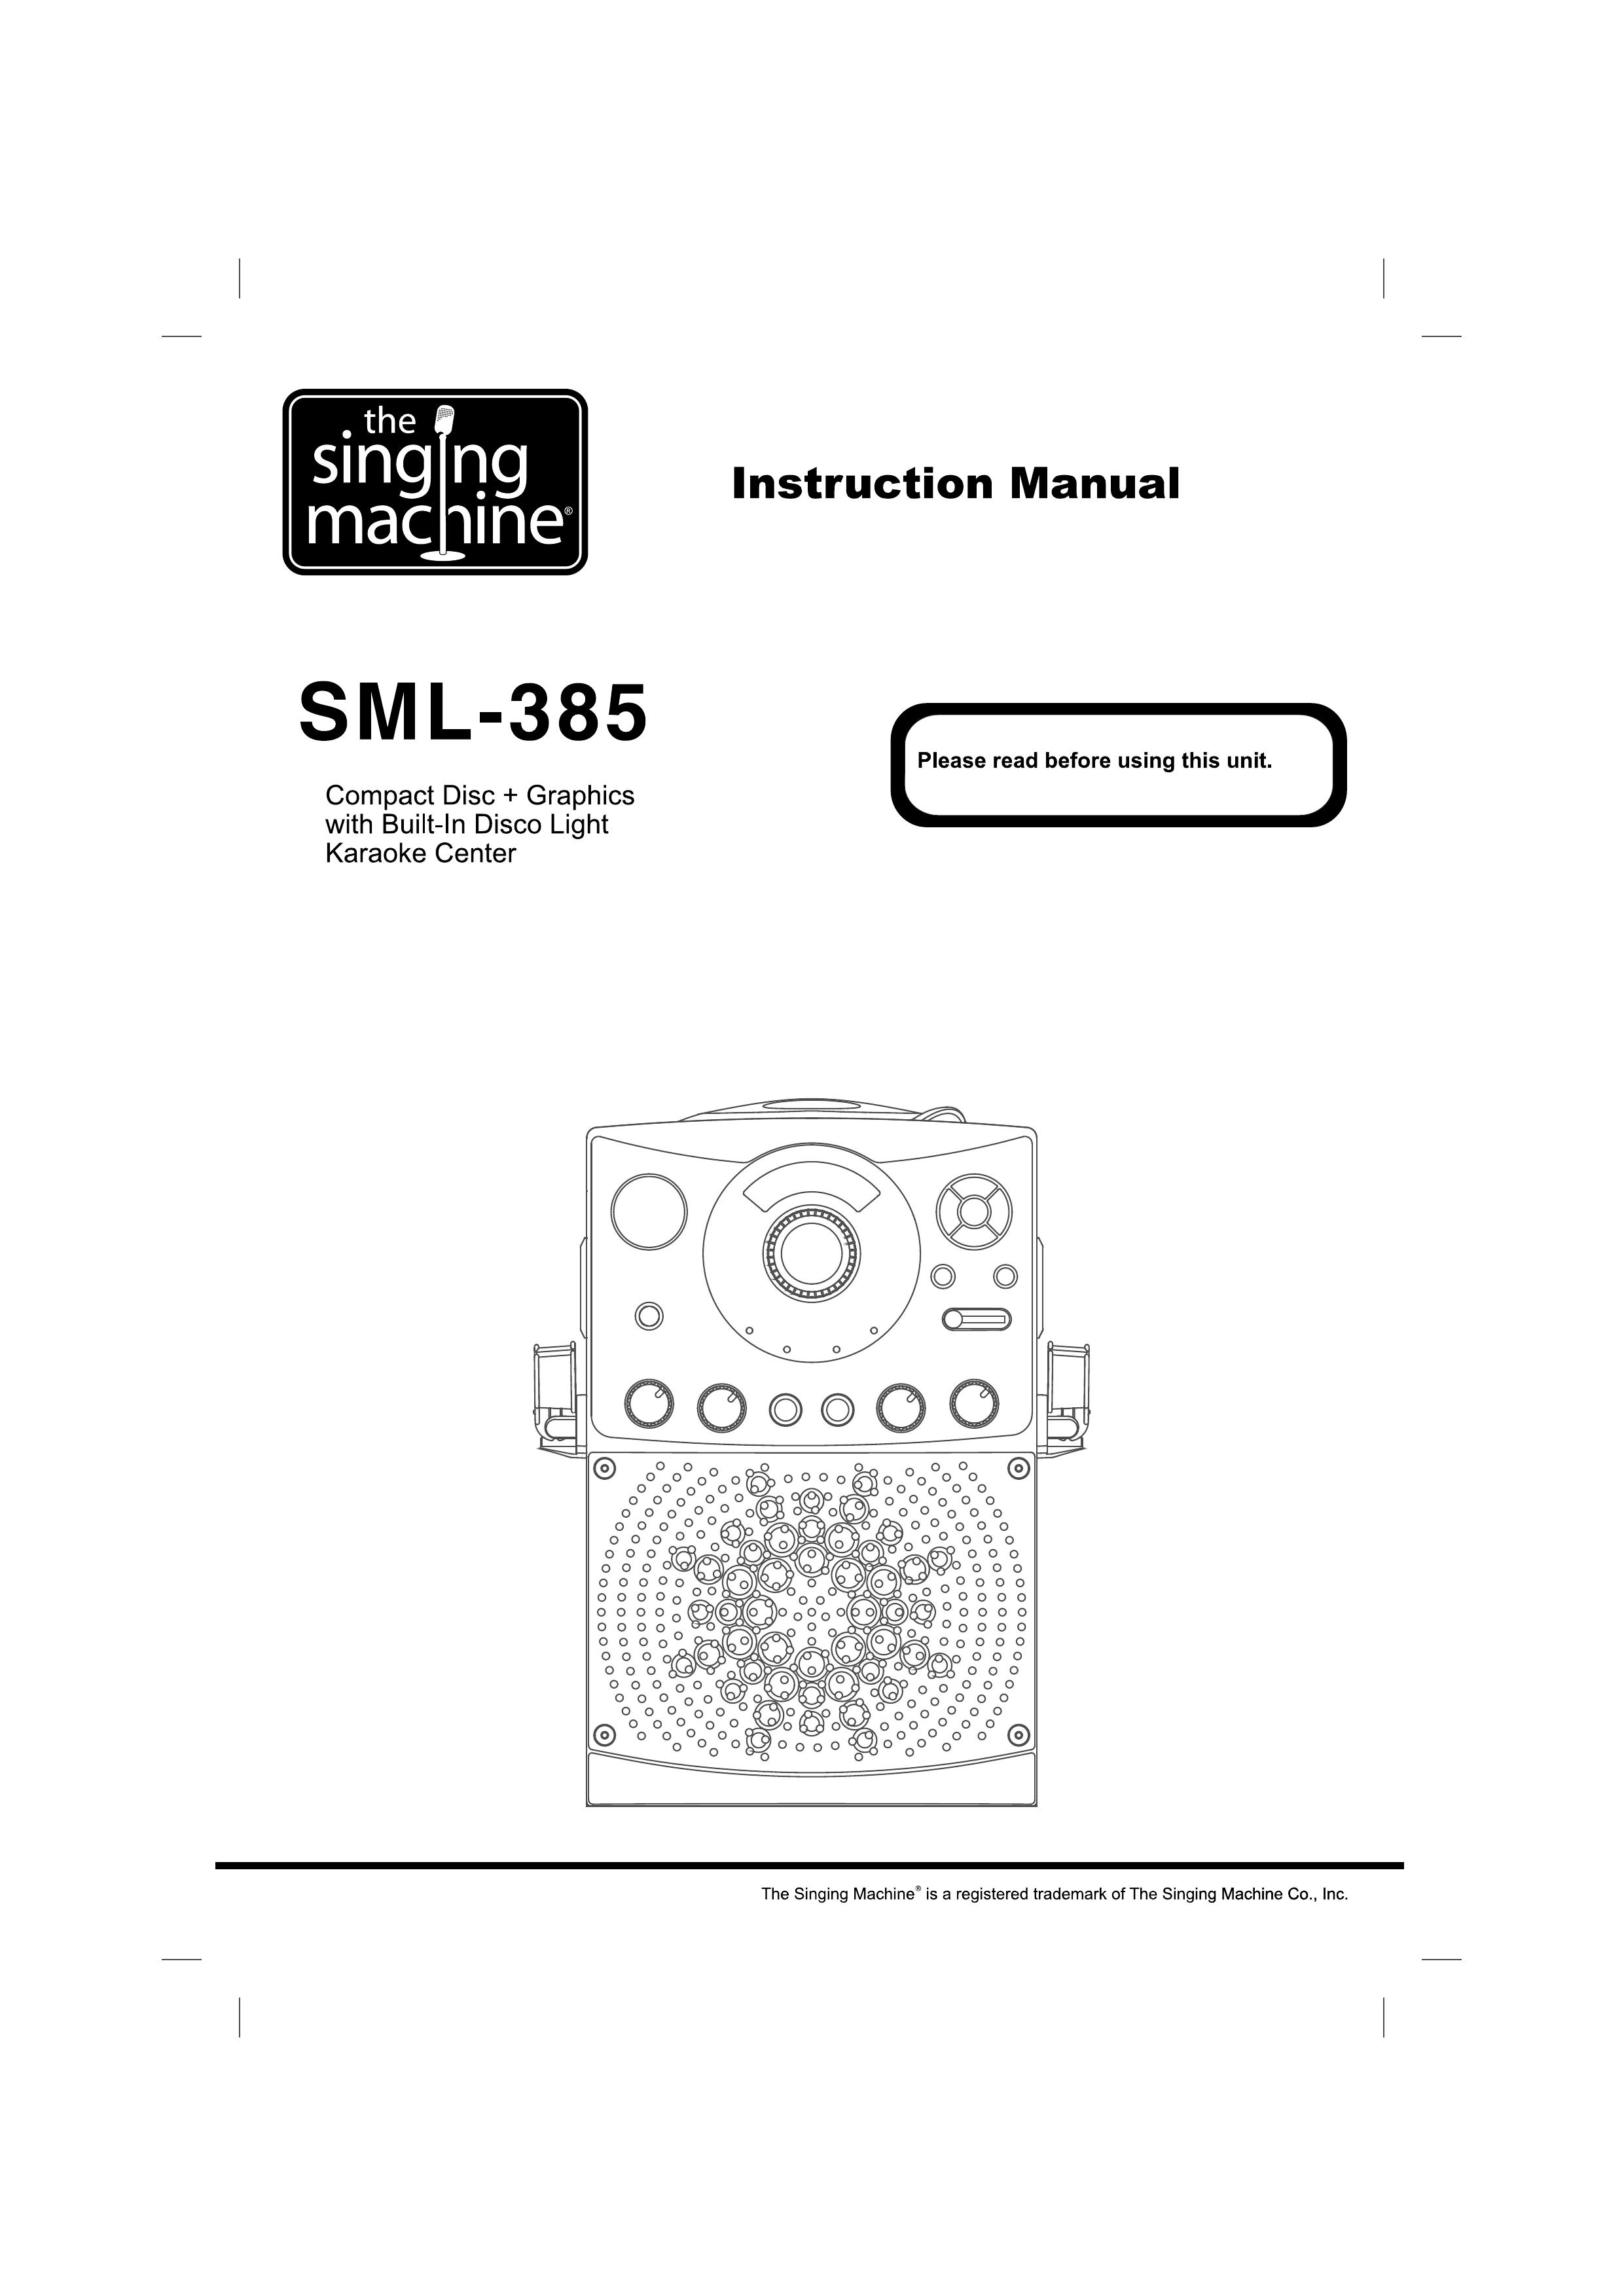 The Singing Machine SML-385 Karaoke Machine User Manual